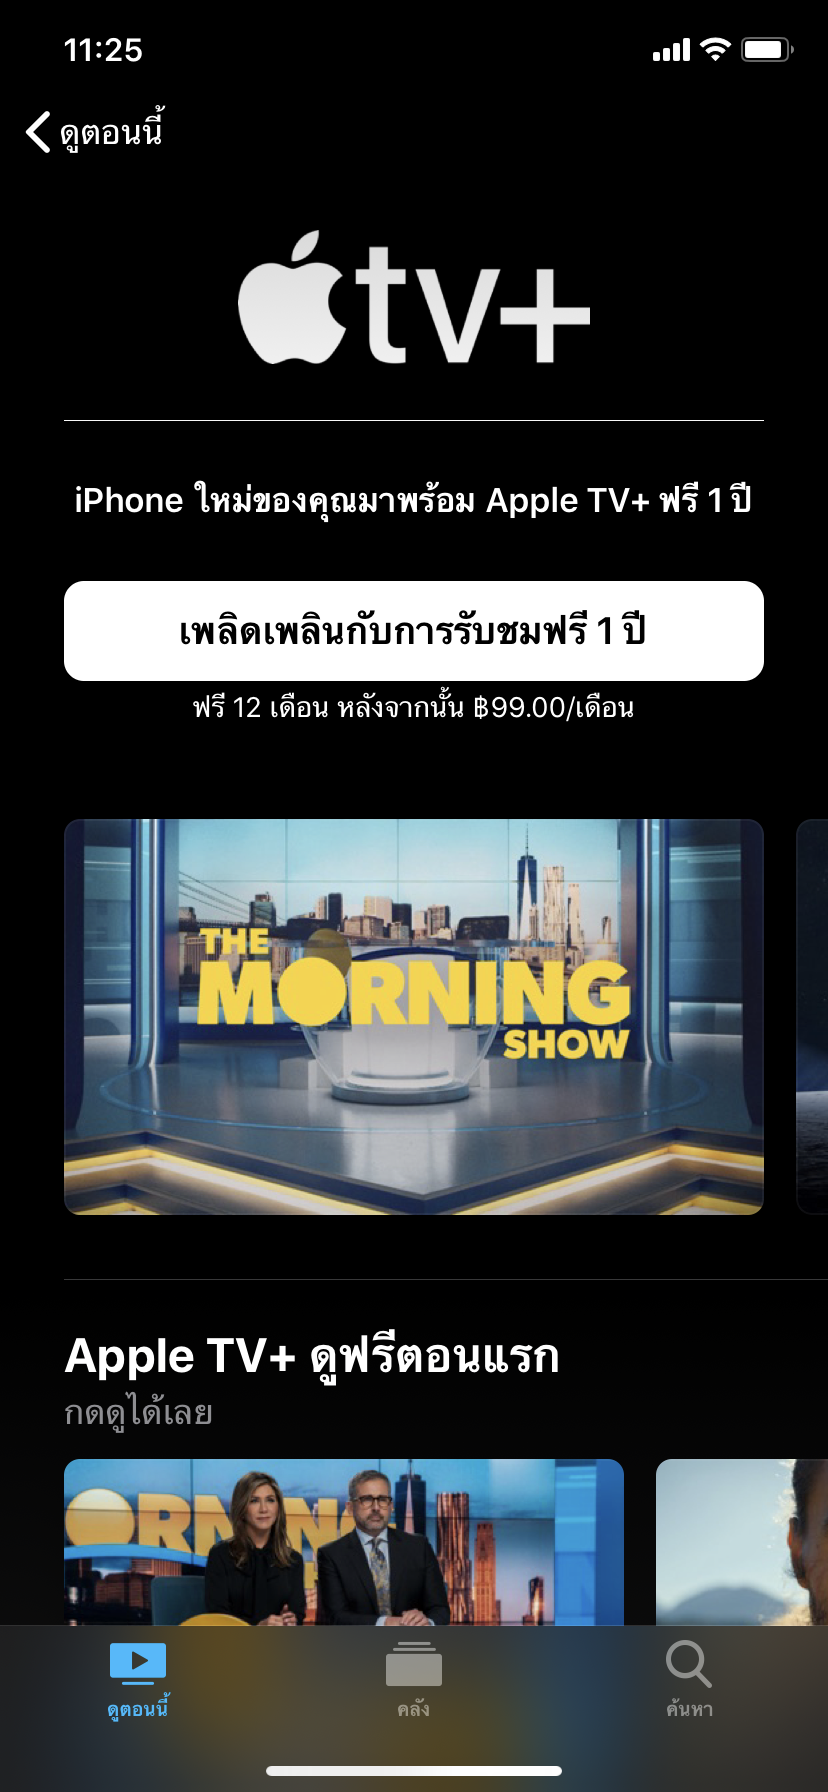 Apple TV+ 3